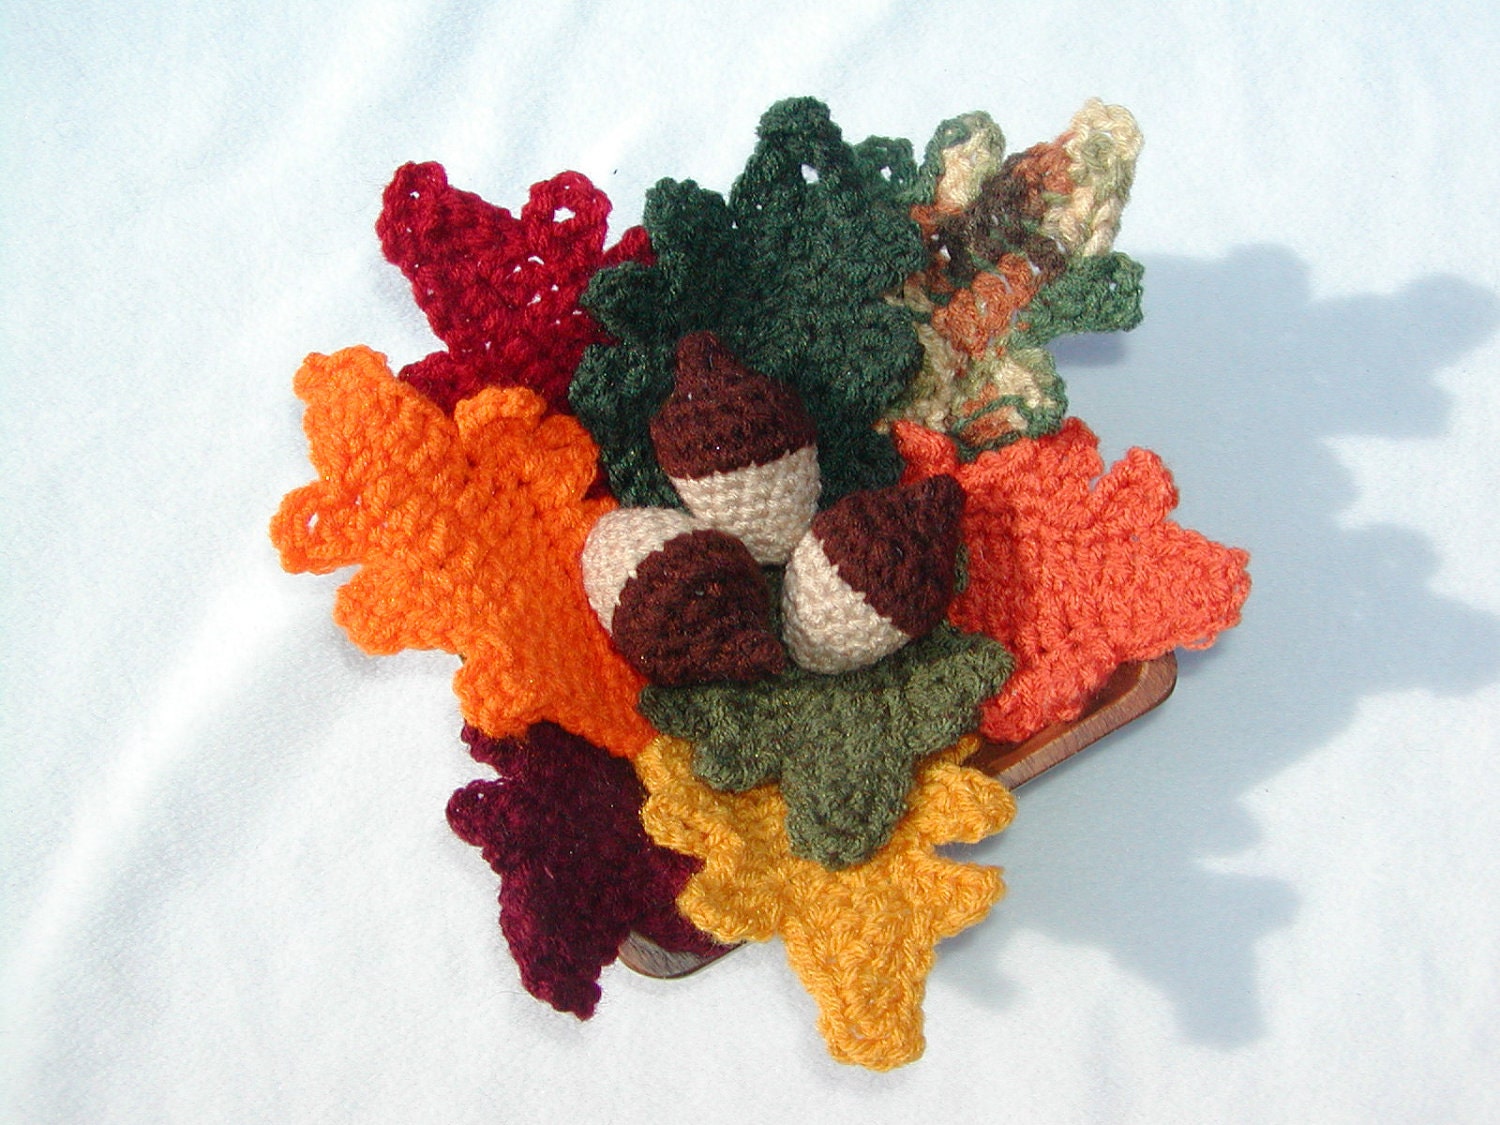 Crocheted Fall Leaves and Acorn Group - honeybee69